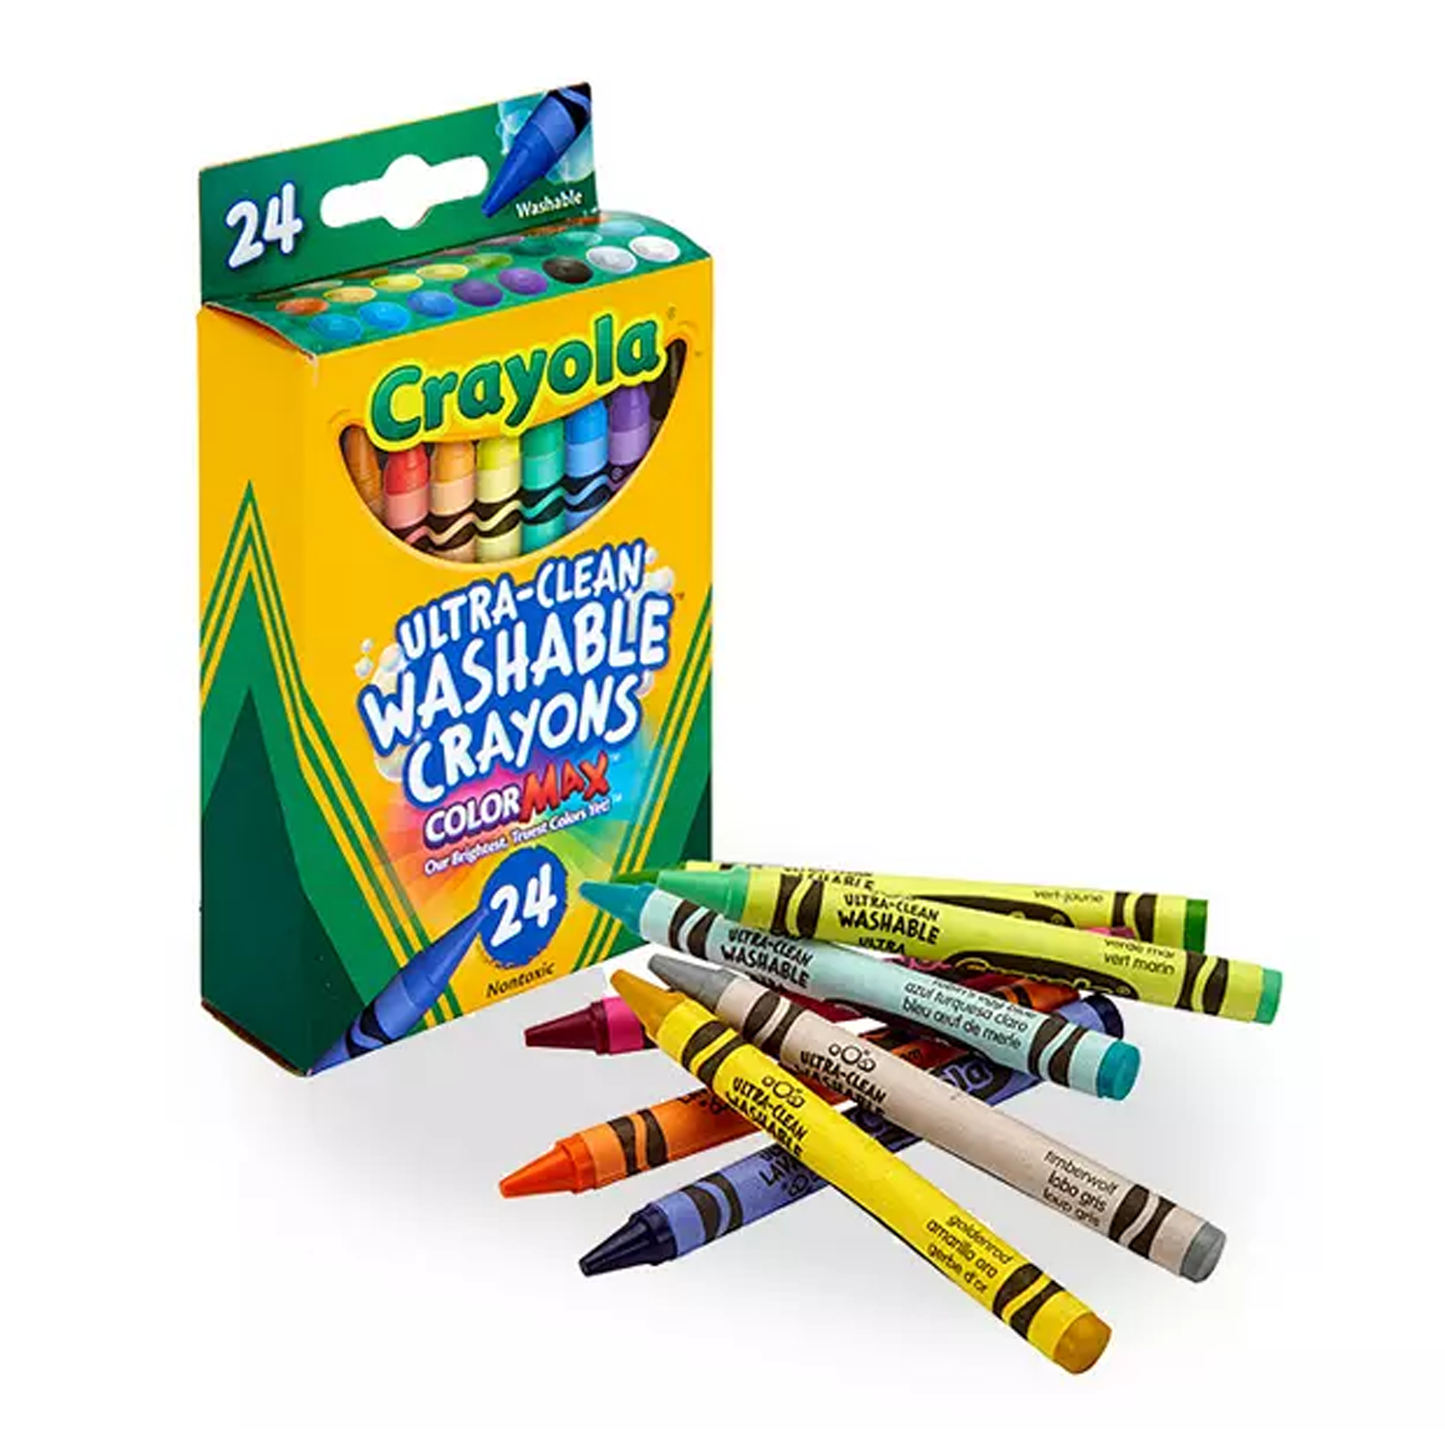 Crayola 24 ct Washable Crayons